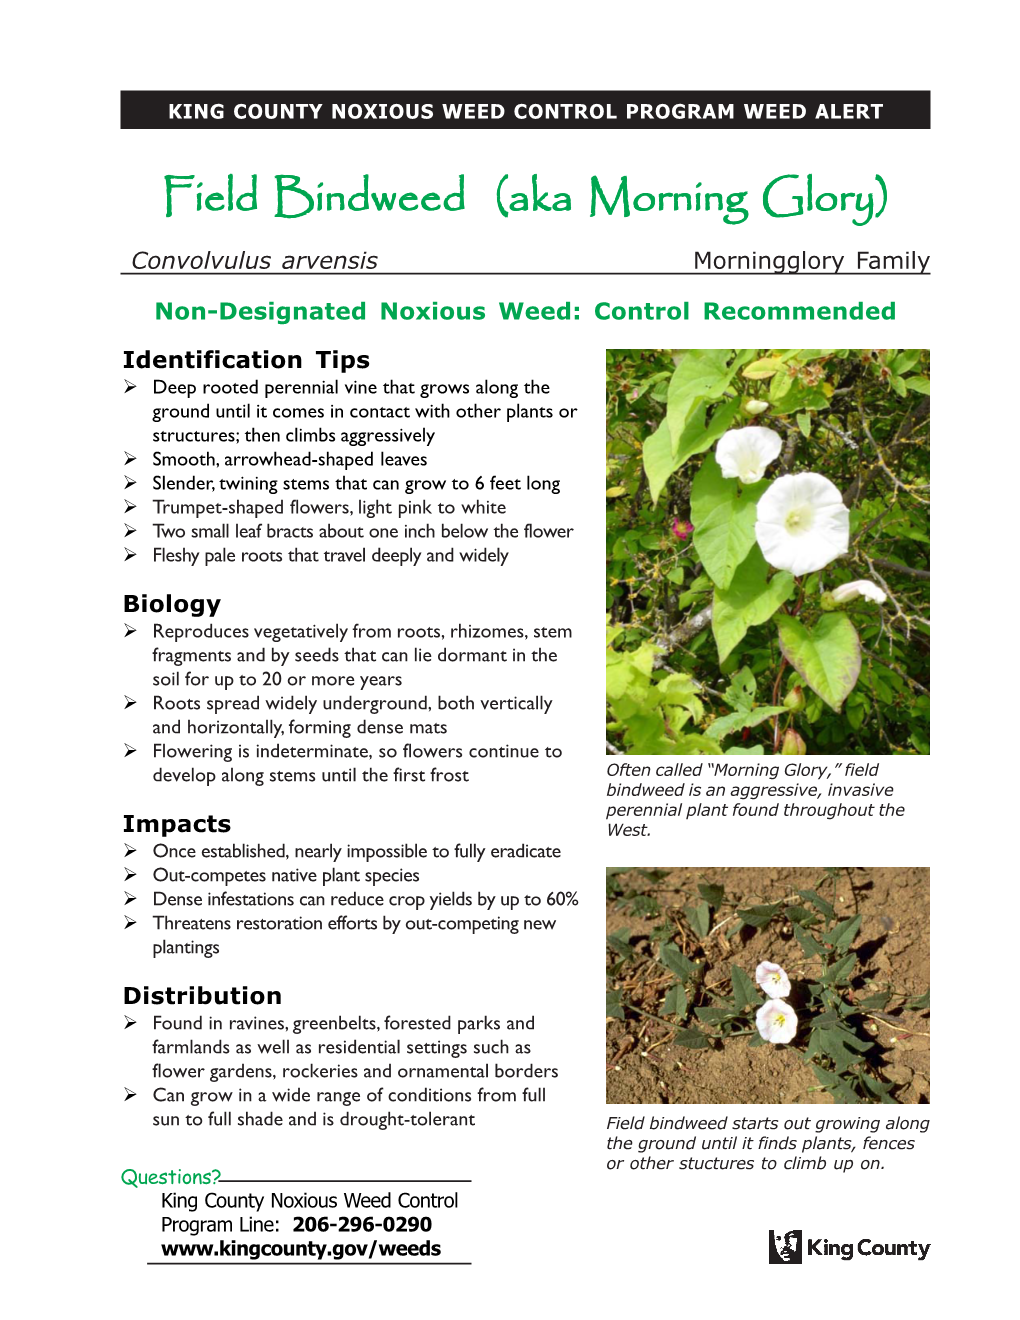 Field Bindweed Aka Morning Glory (Convolvulus Arvensis)